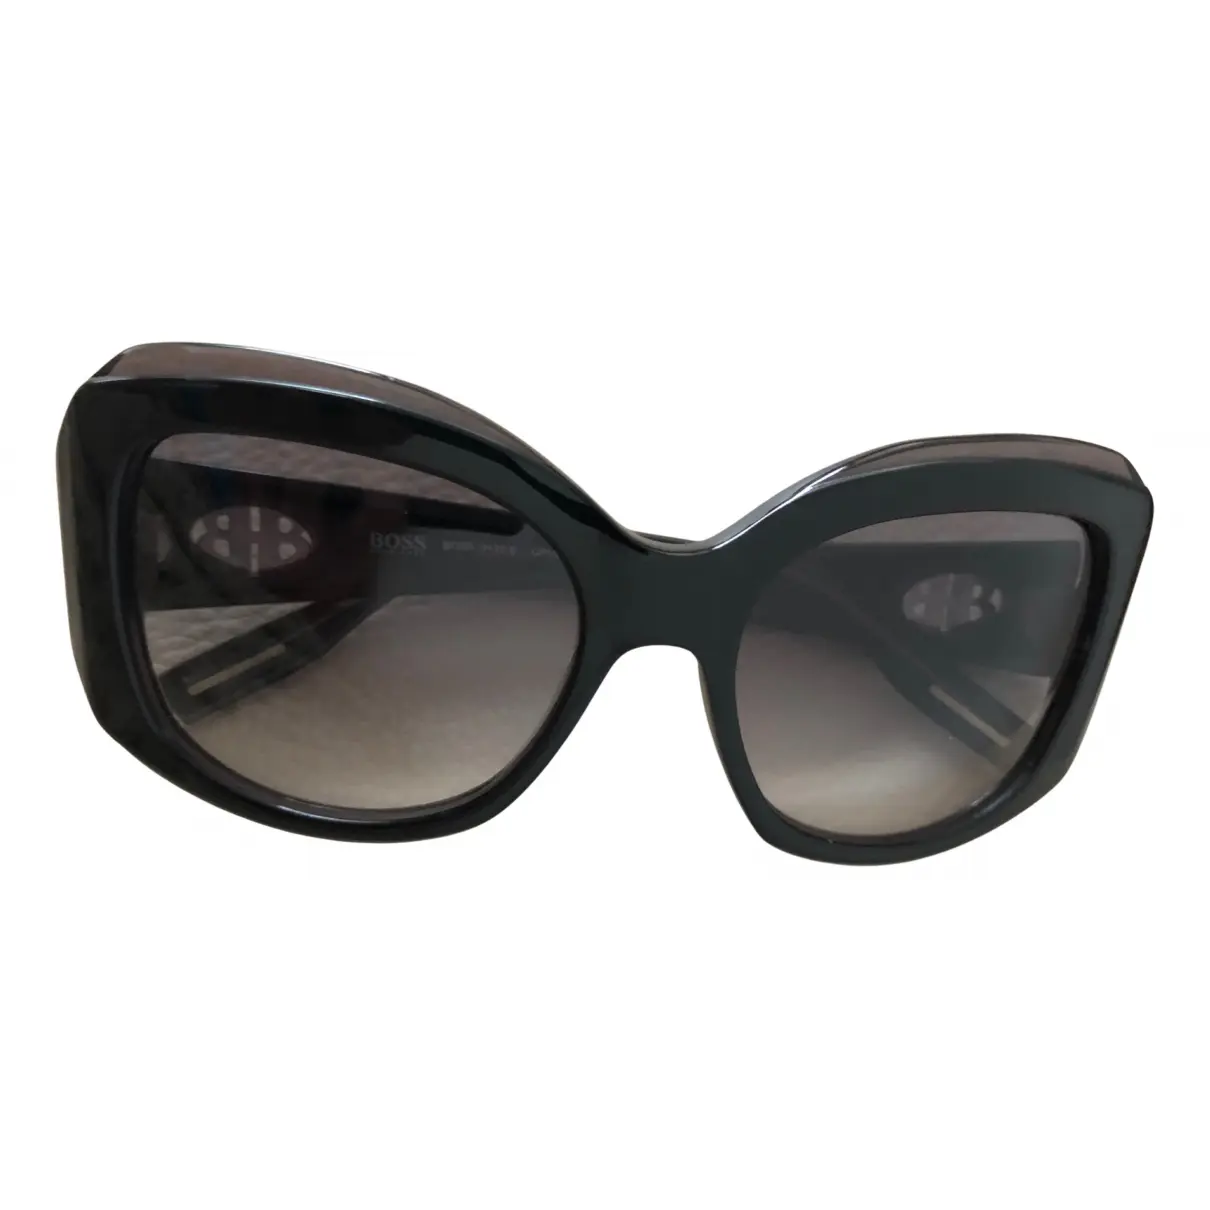 Oversized sunglasses Hugo Boss